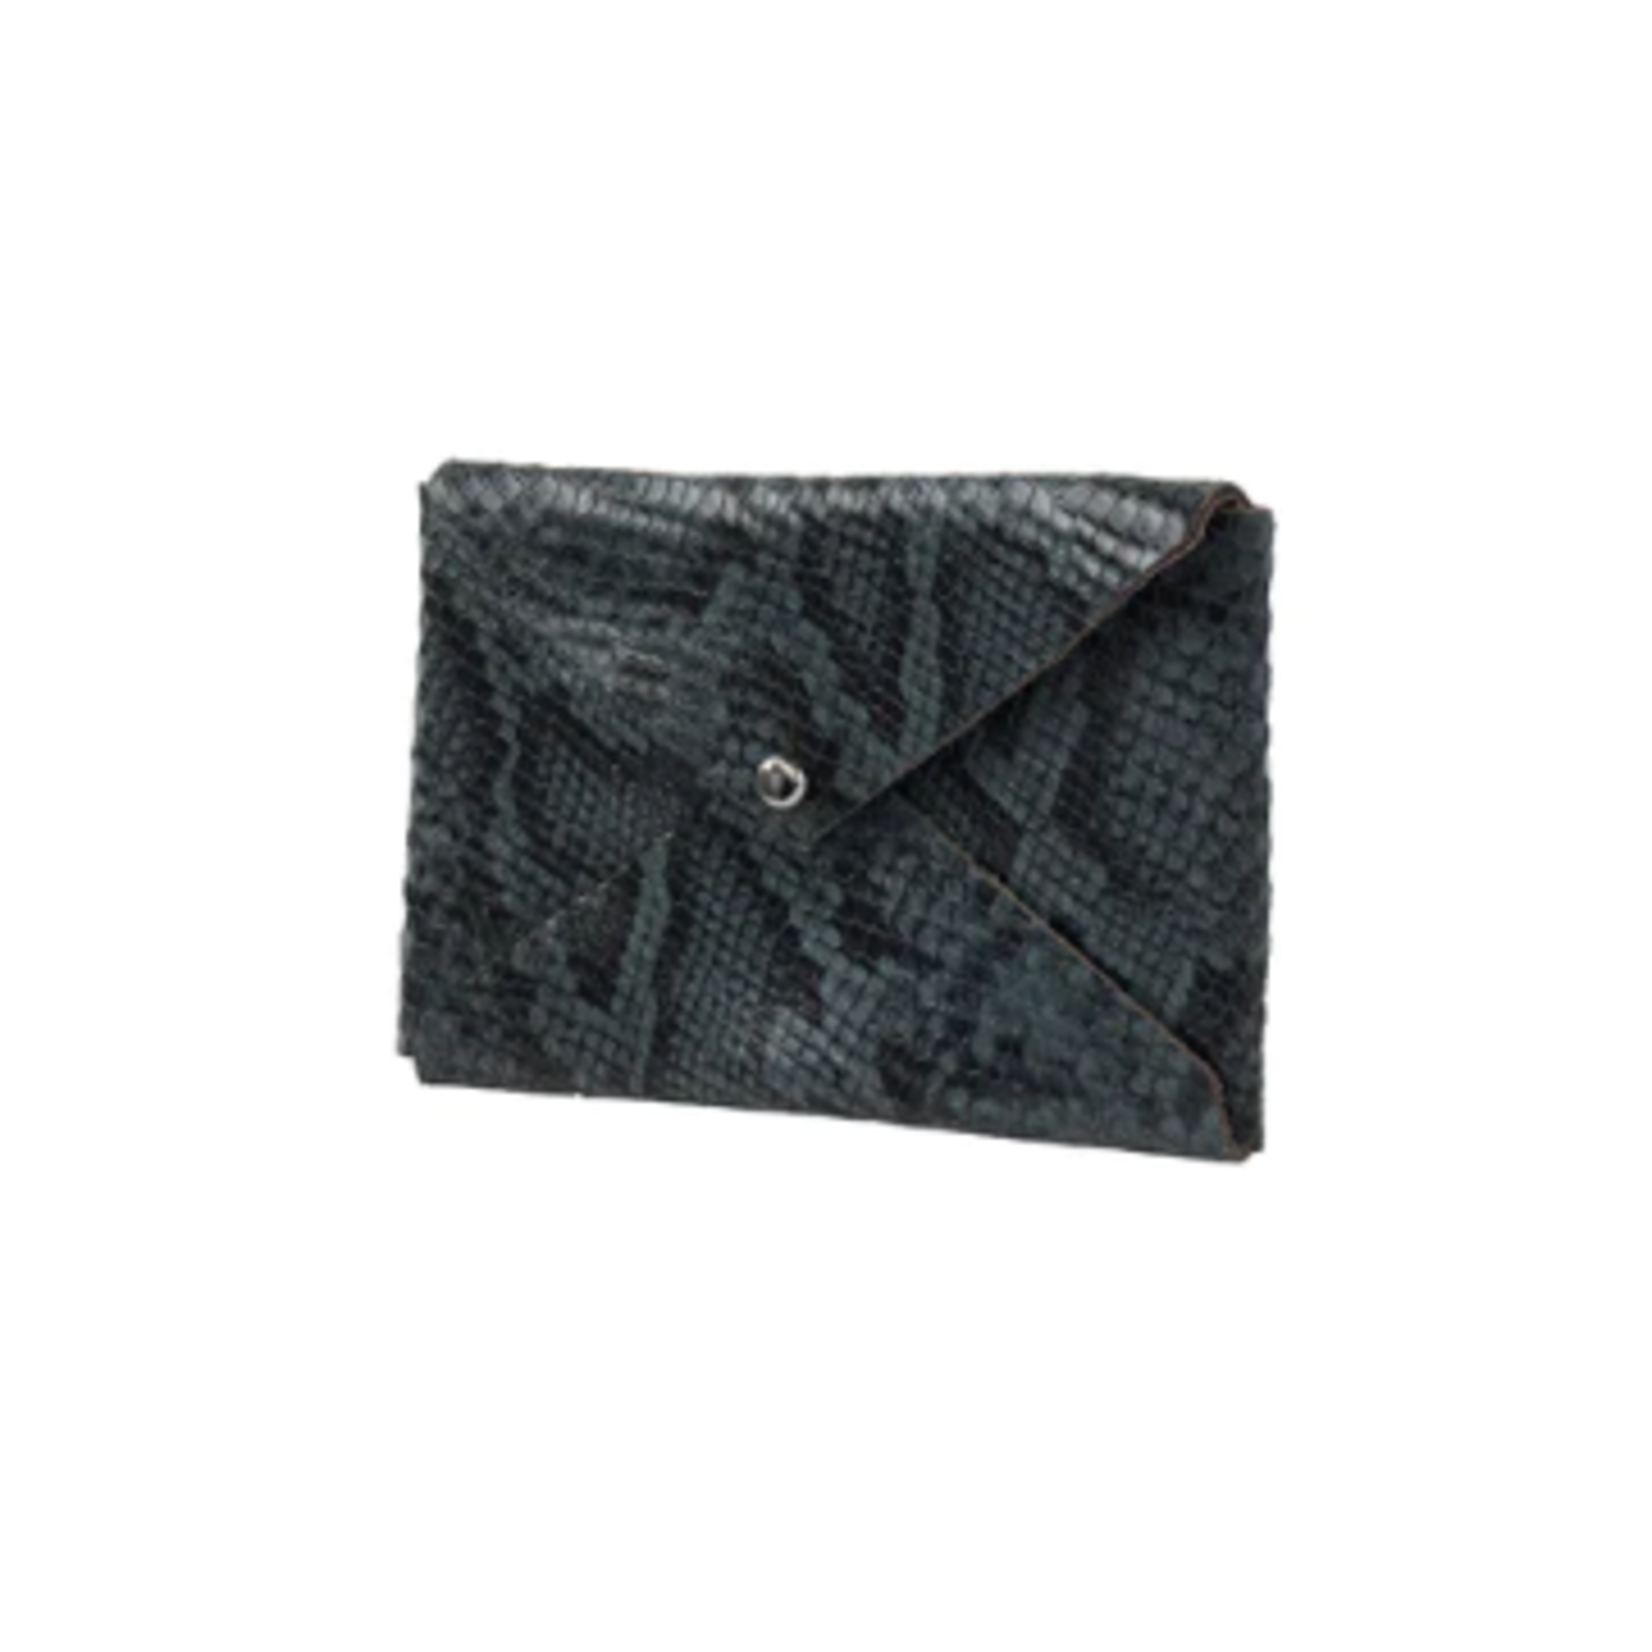 Andie Leather Wallet